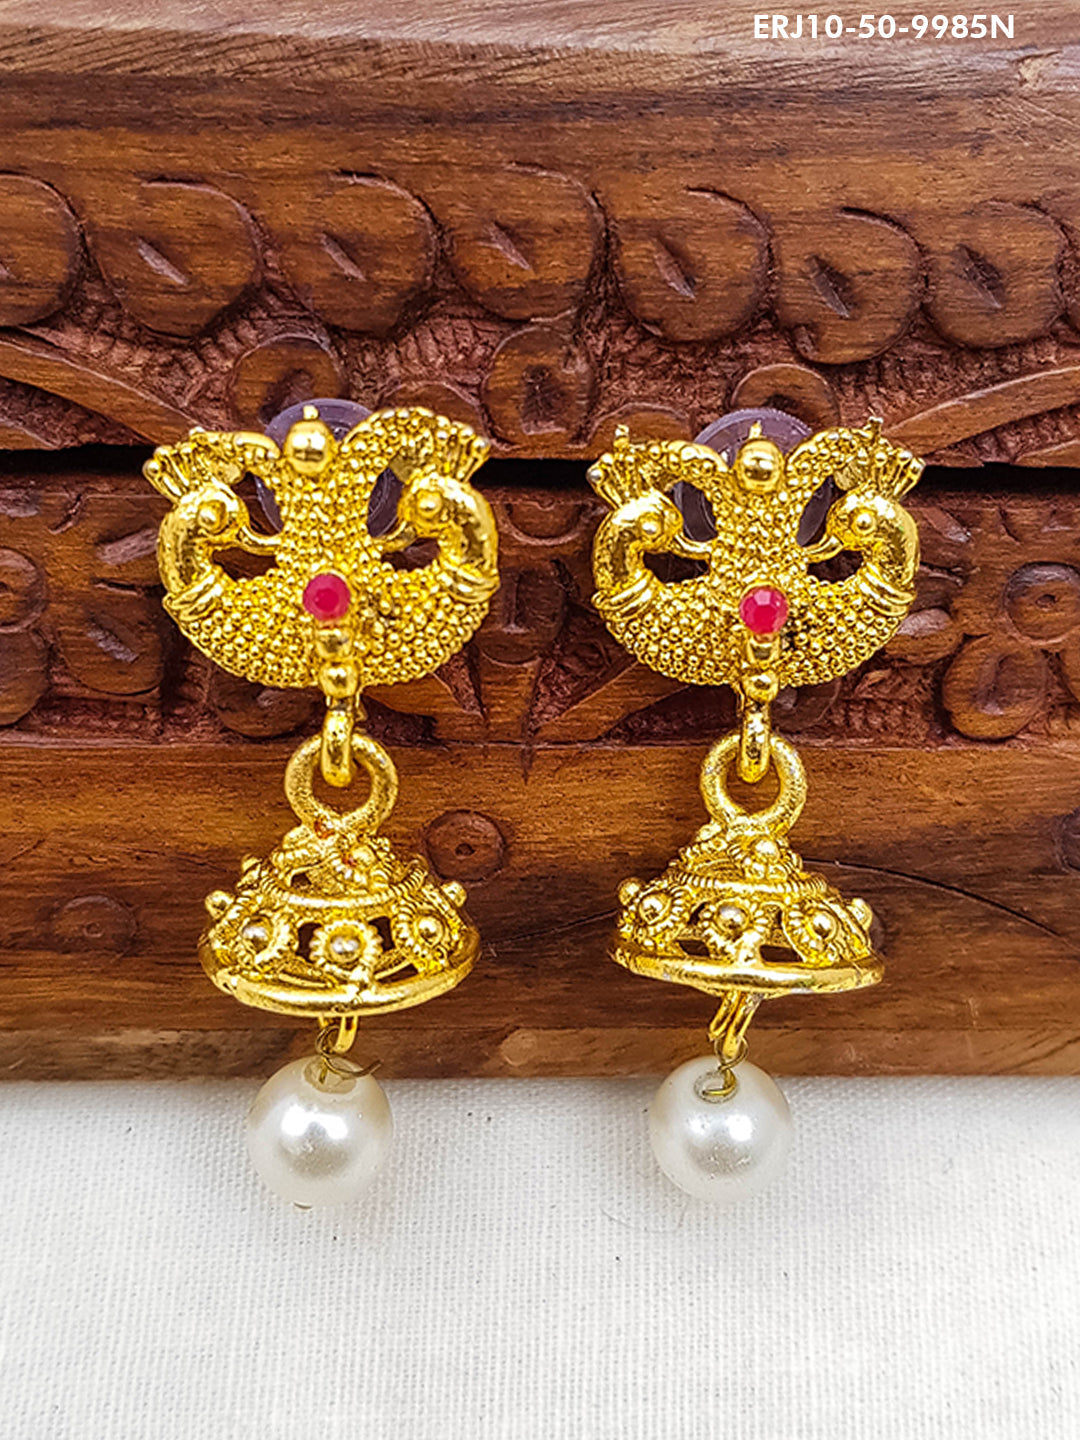 Gold Plated AD Studded earrings / Jumkis 9985N